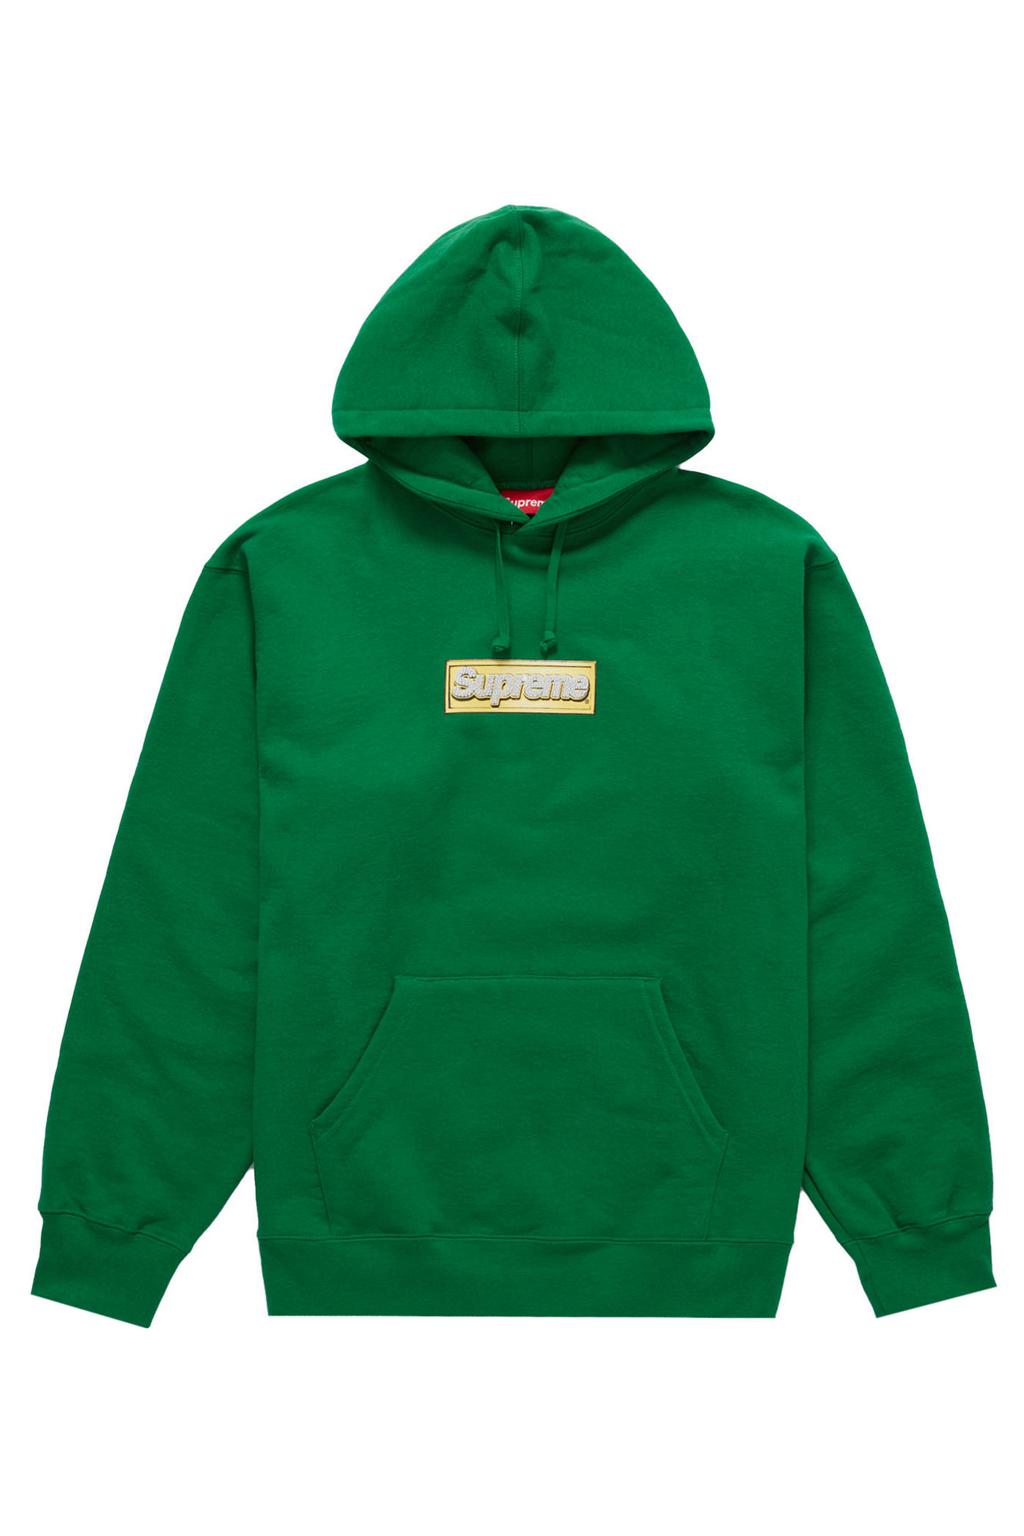 Supreme Bling Box Logo Hooded Sweatshirt Green - Sole Cart